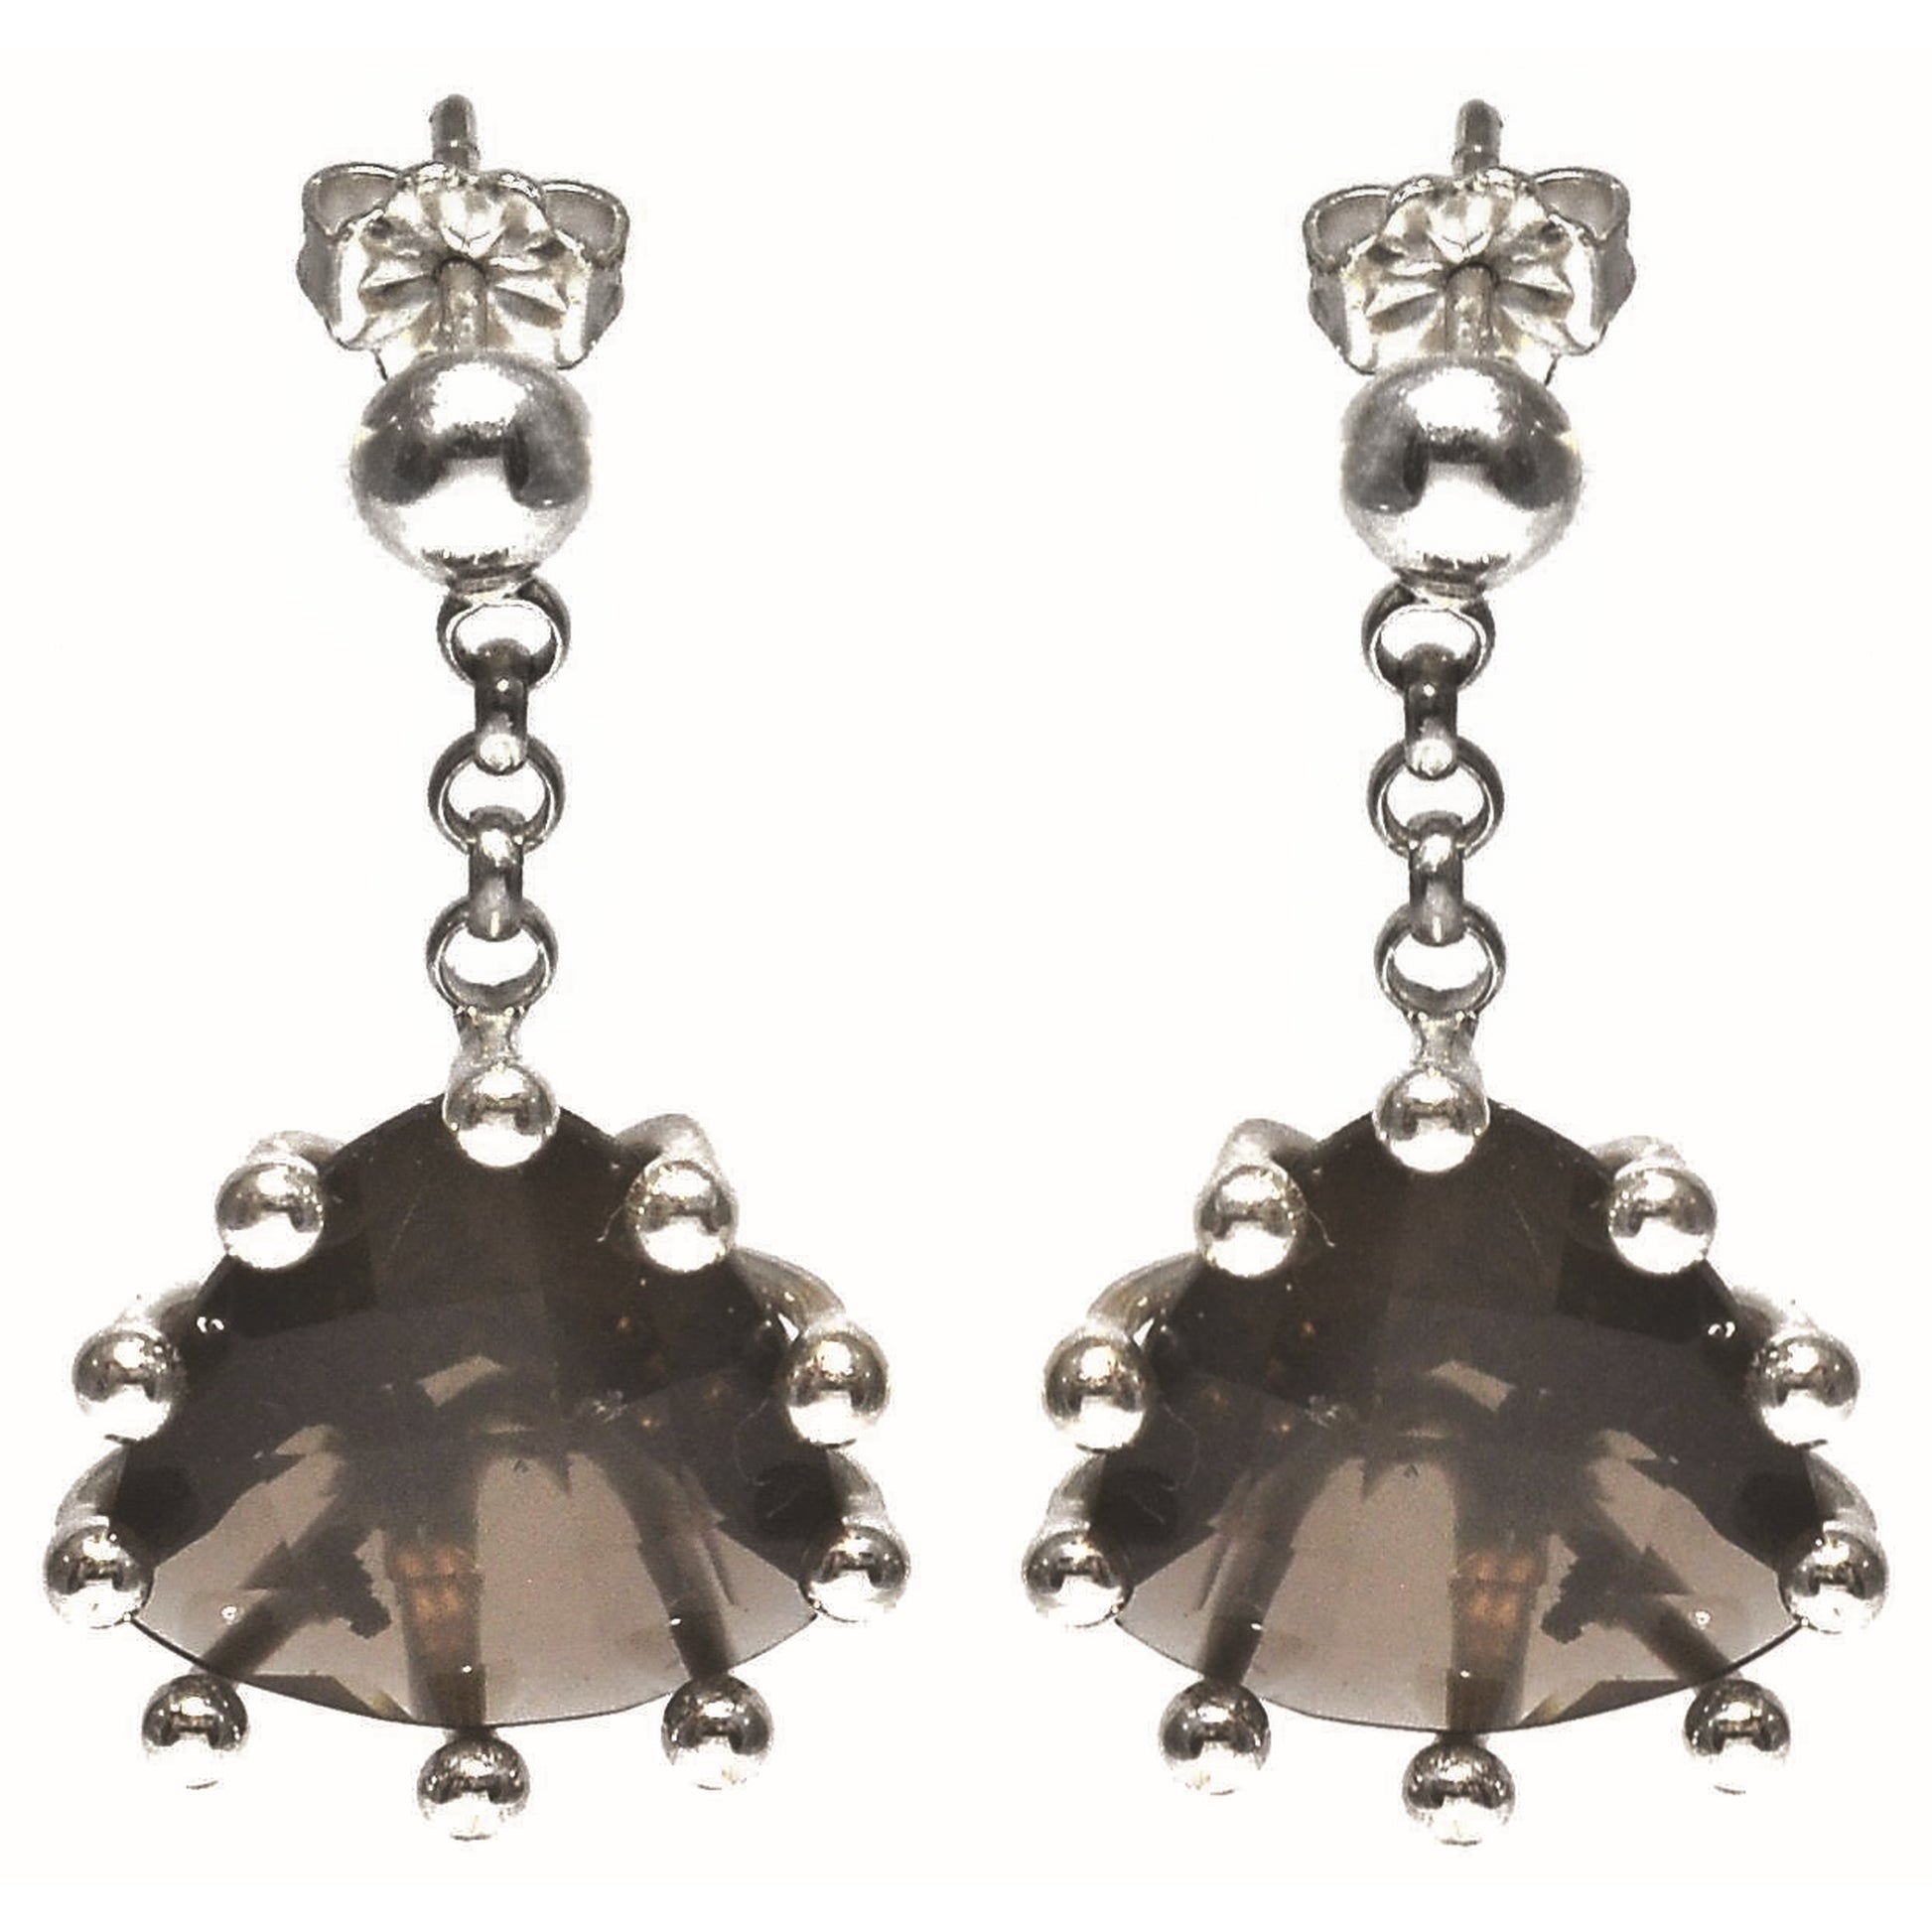 Silver earrings with triangle-shape smoky topaz stones.